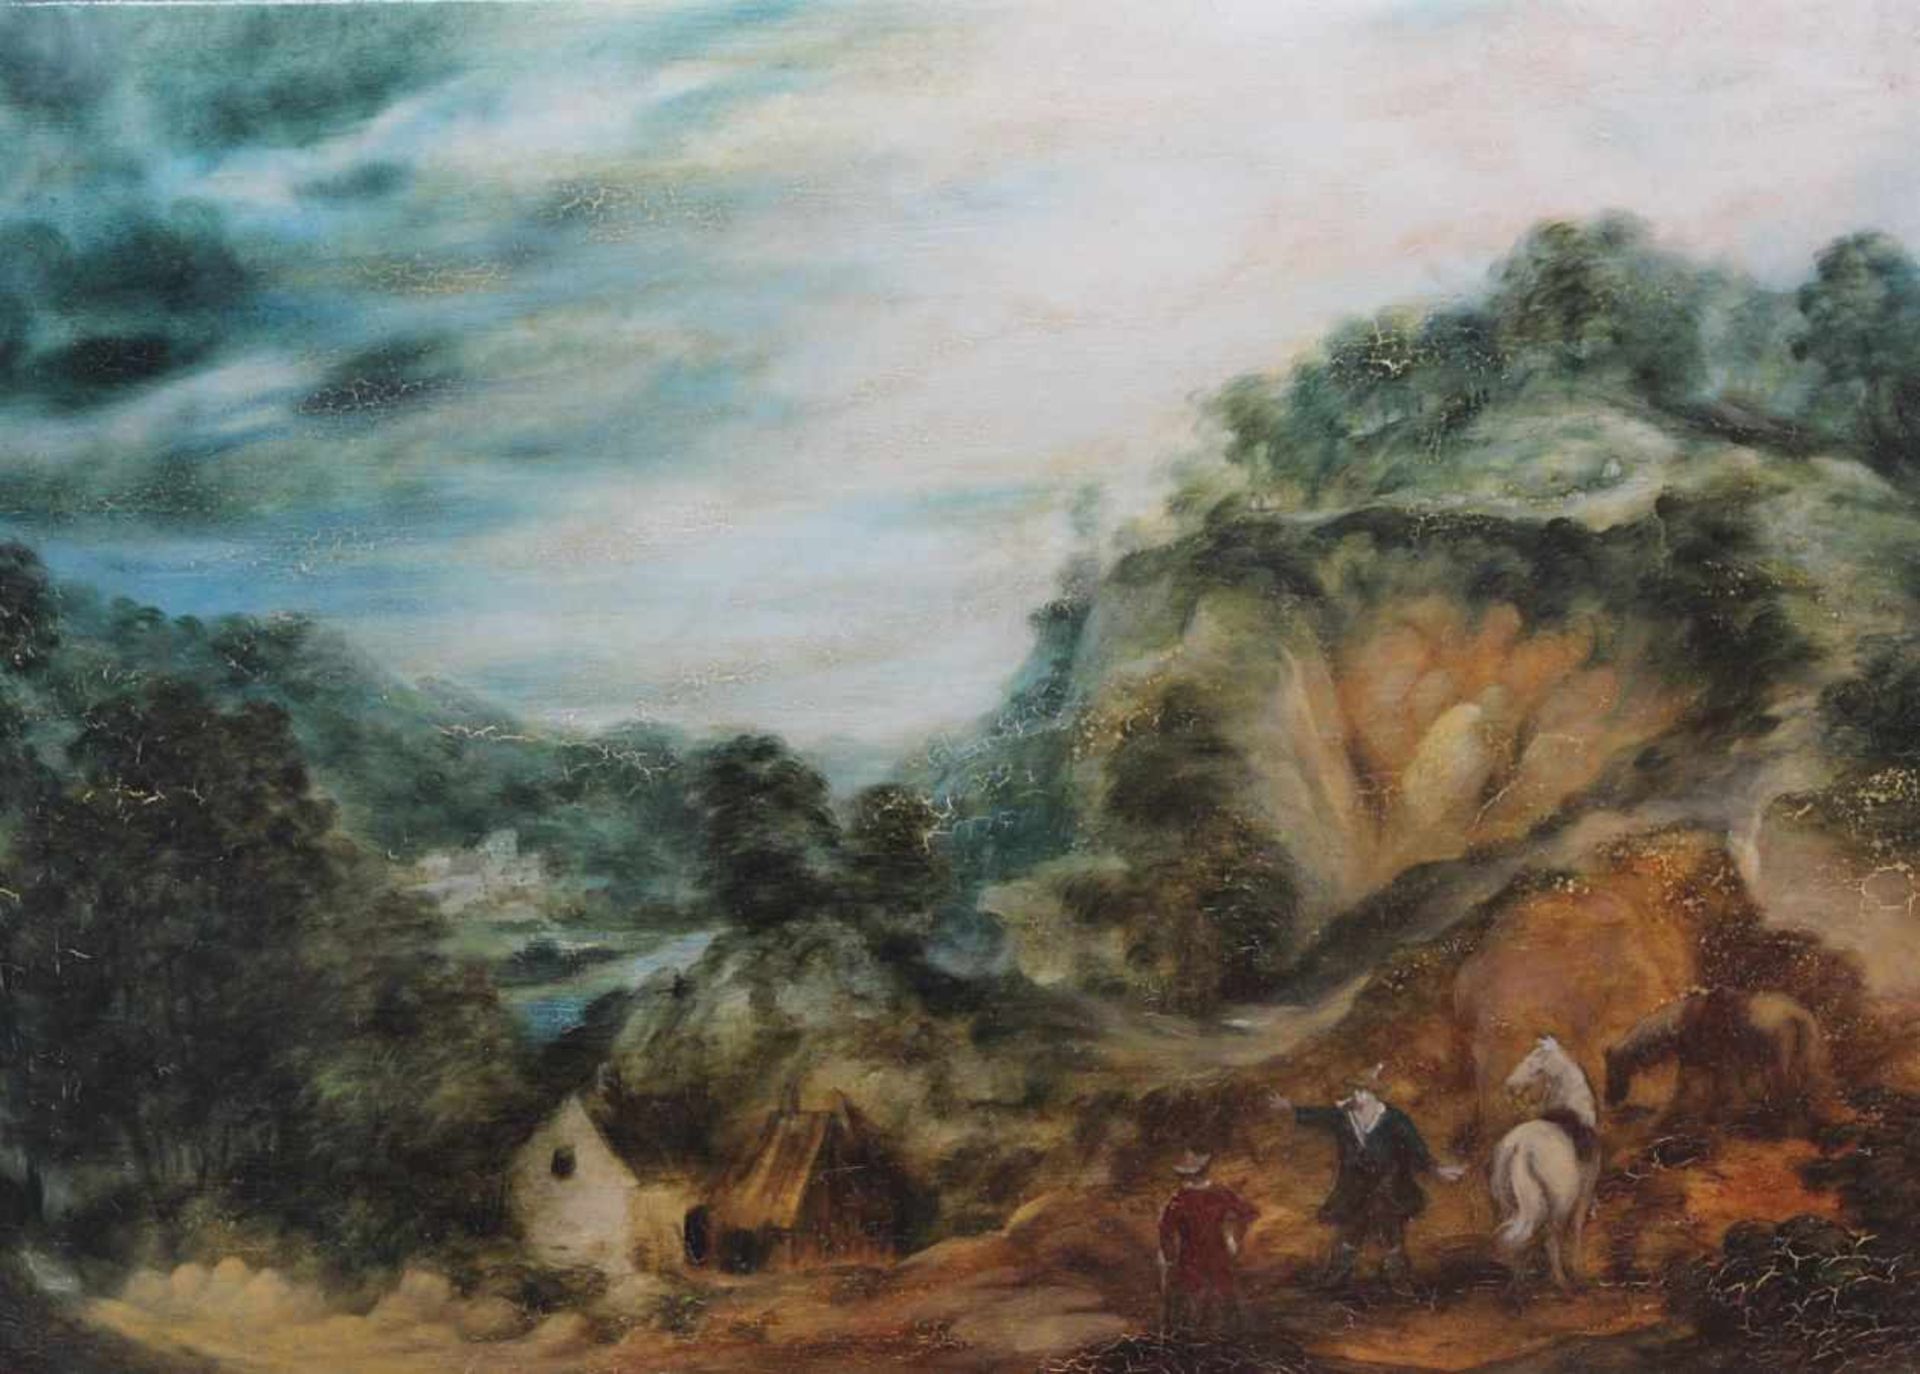 Gemälde - Walter Tanau (1911 Lyck - 1971 Kelheim) "Romantische Landschaft", Öl auf Sperrholz, Maße